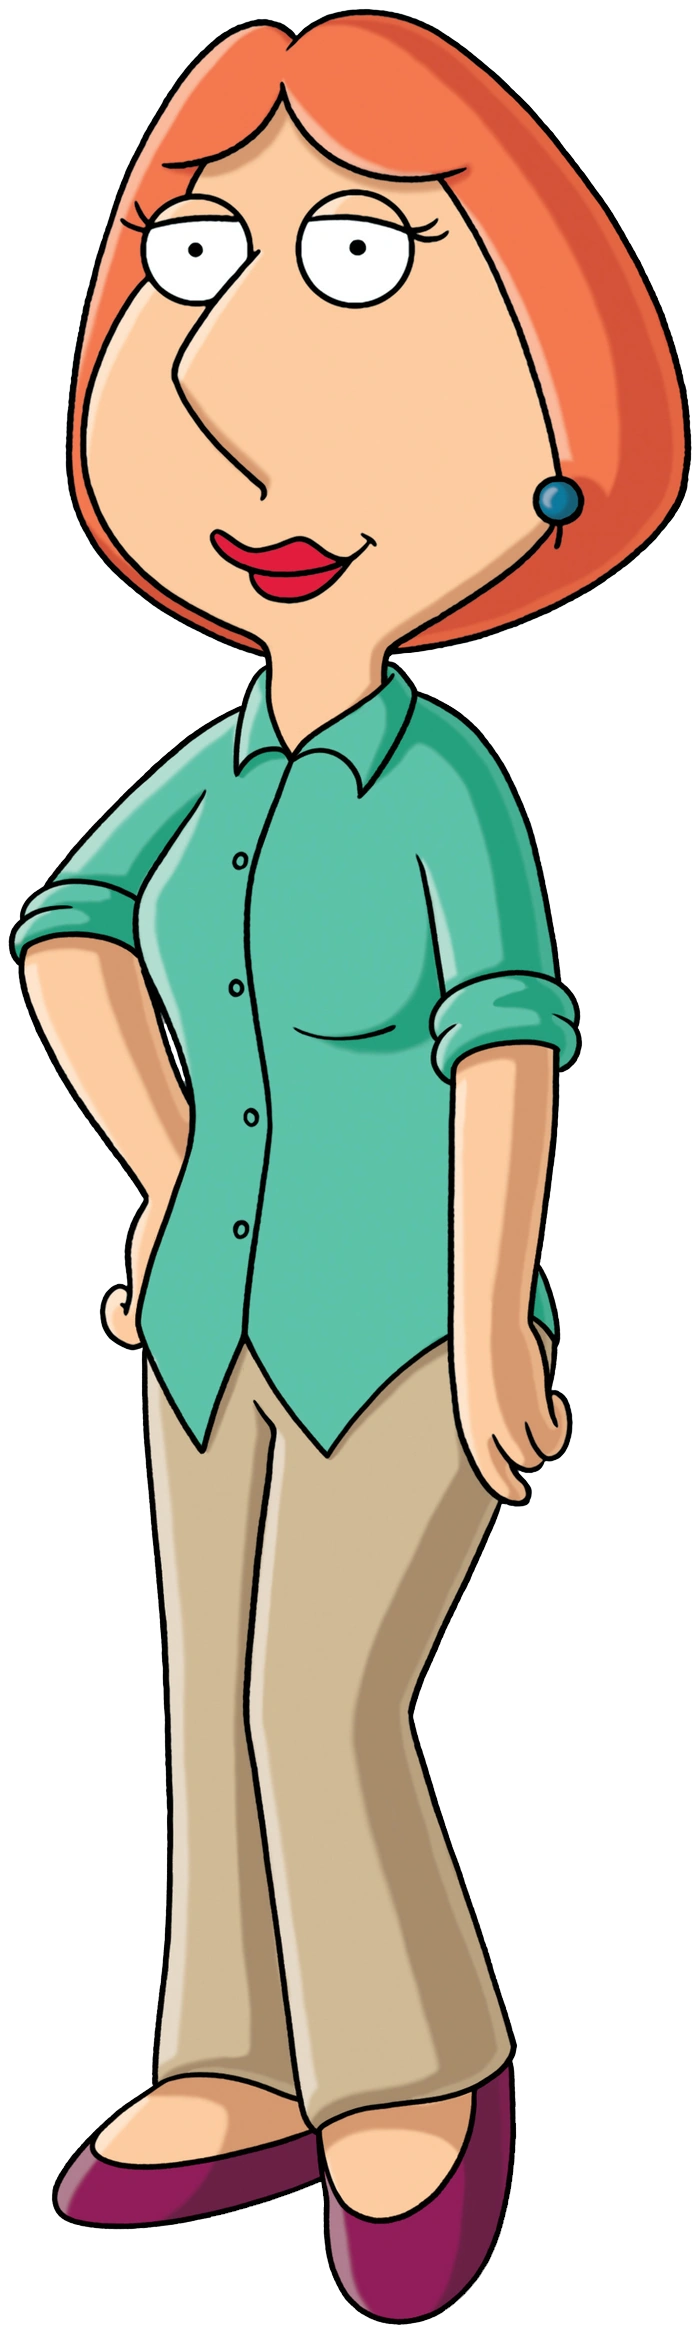 Lois Griffin Family Guy Fanon Wiki Fandom picture